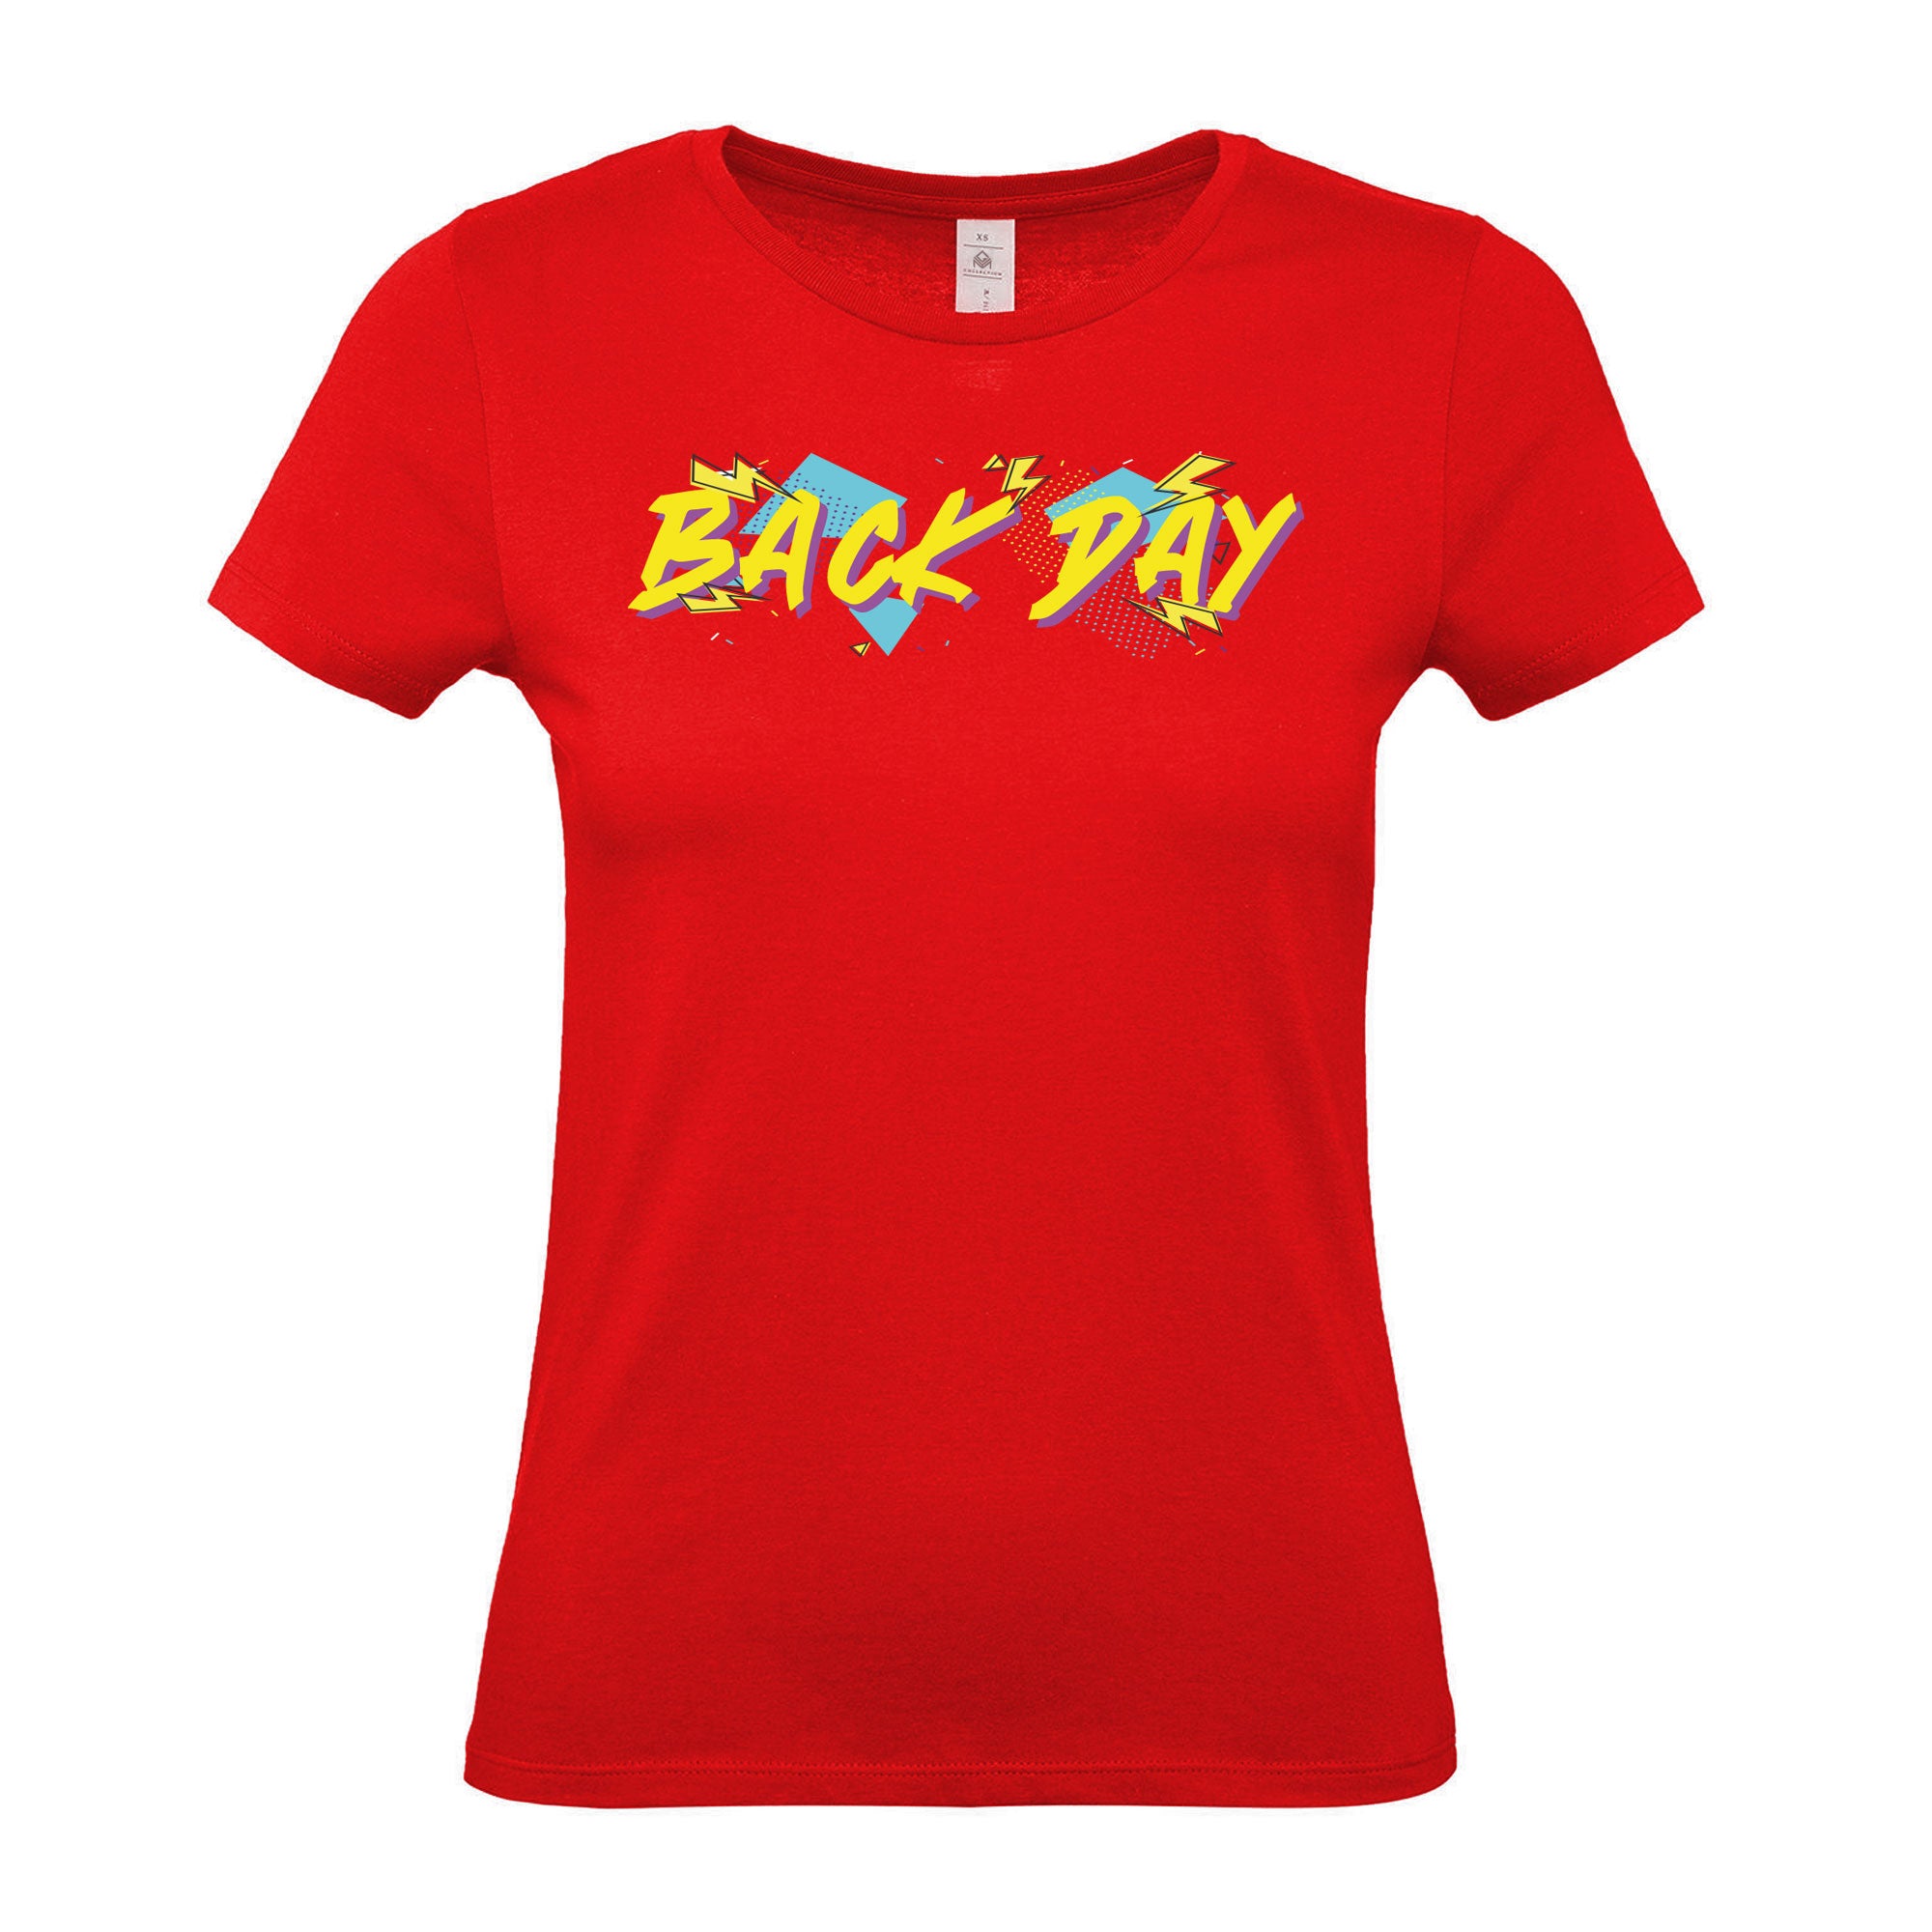 Retro Back Day - Women's Gym T-Shirt